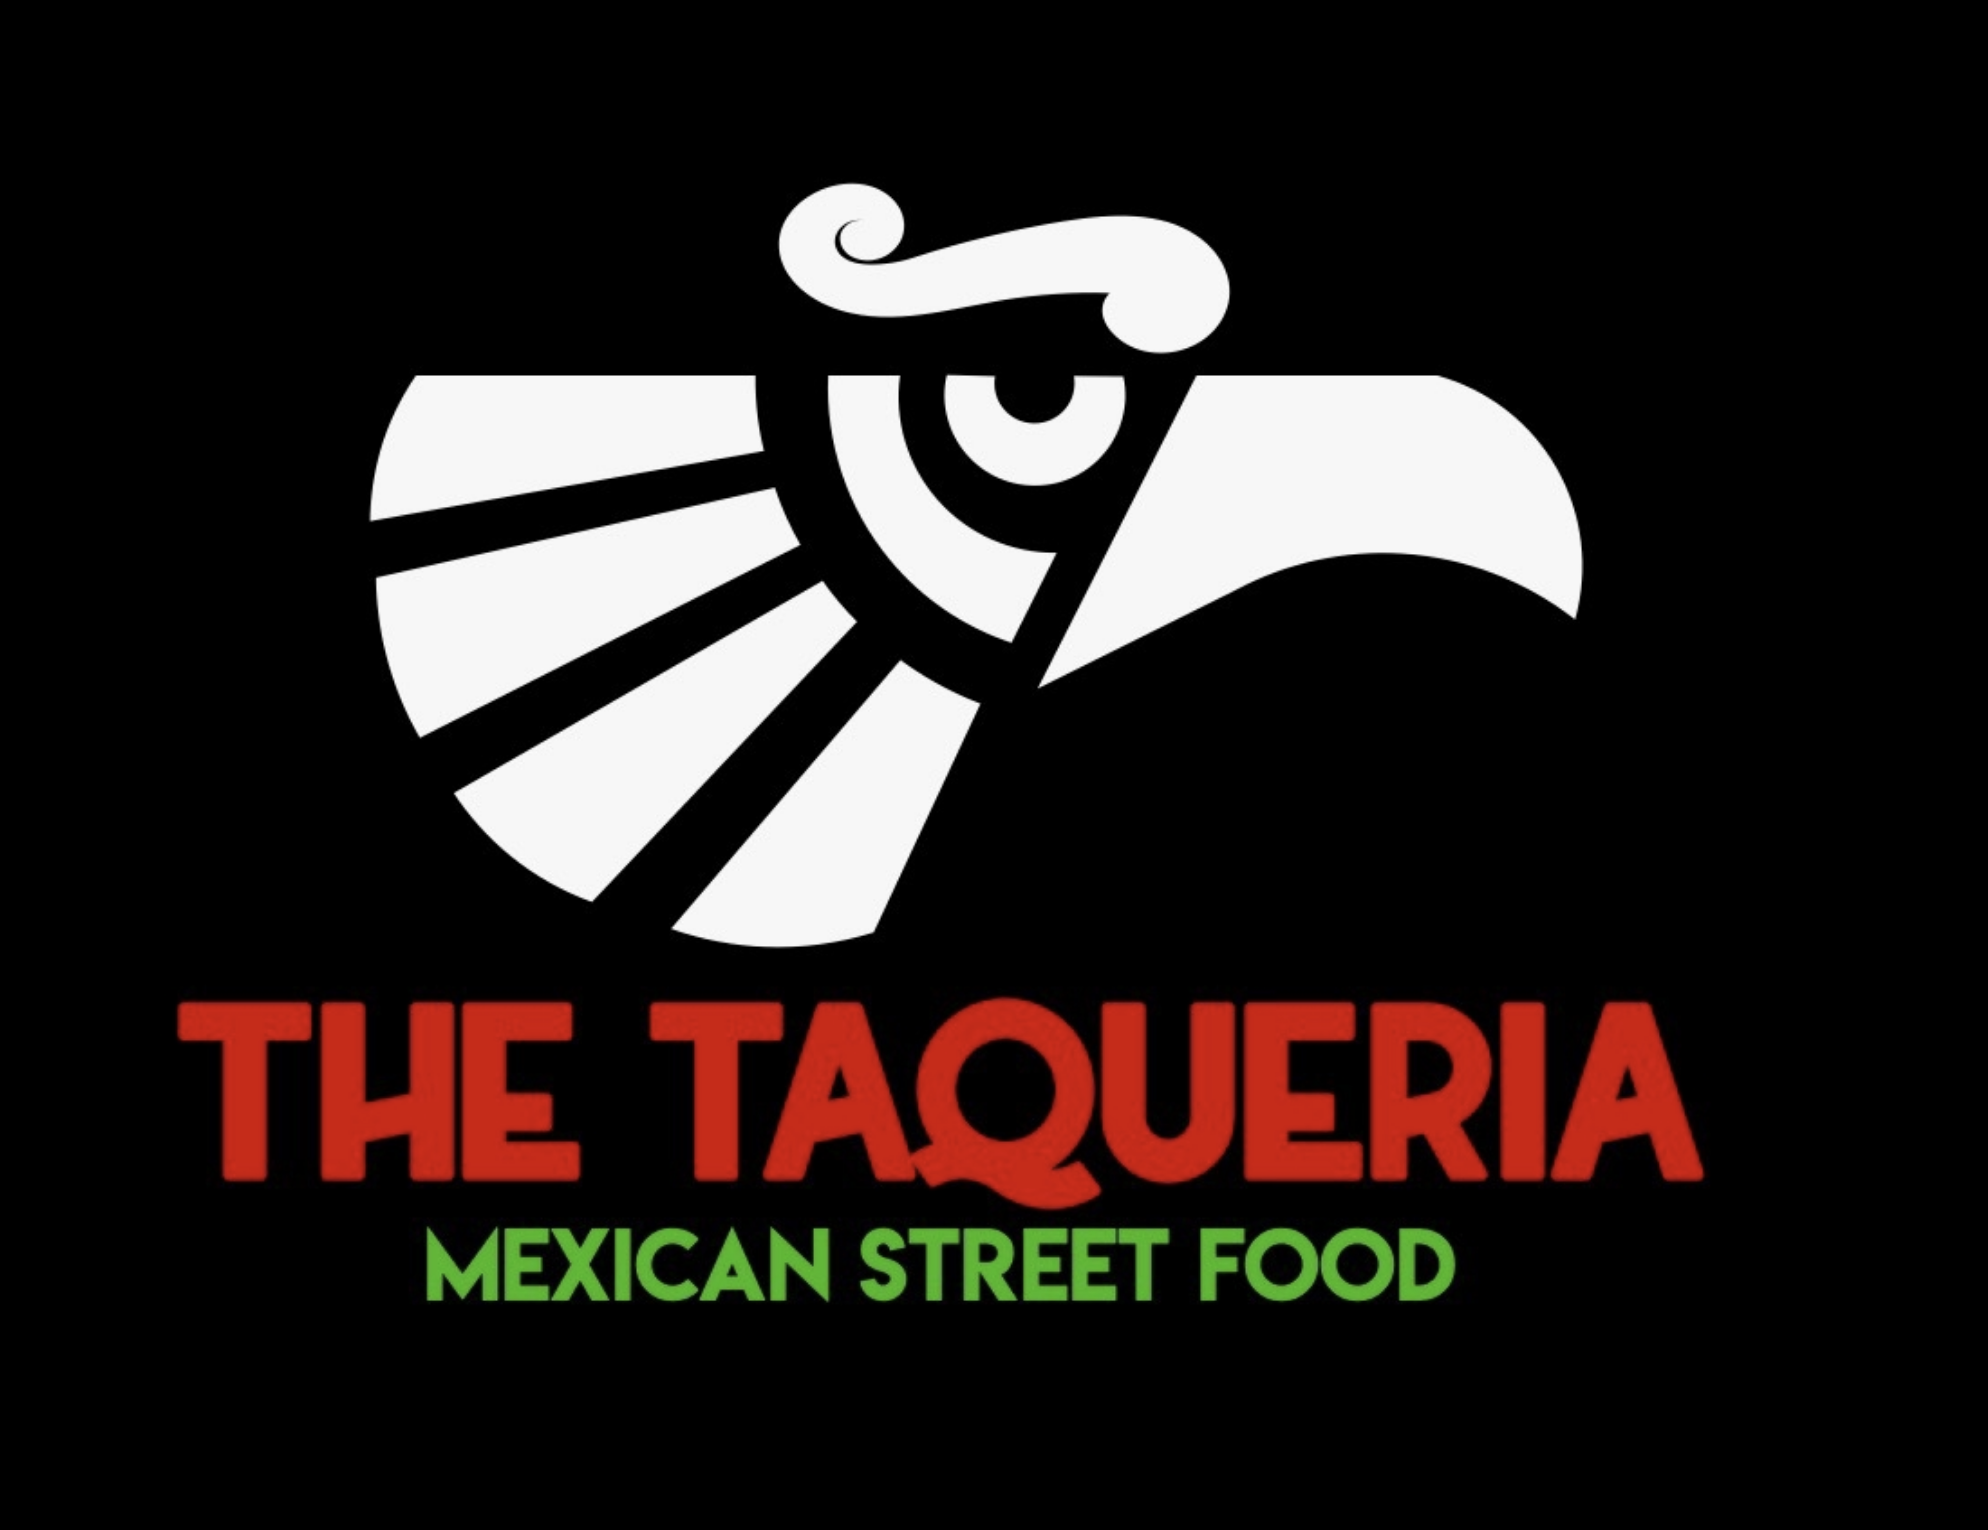 The Taqueria